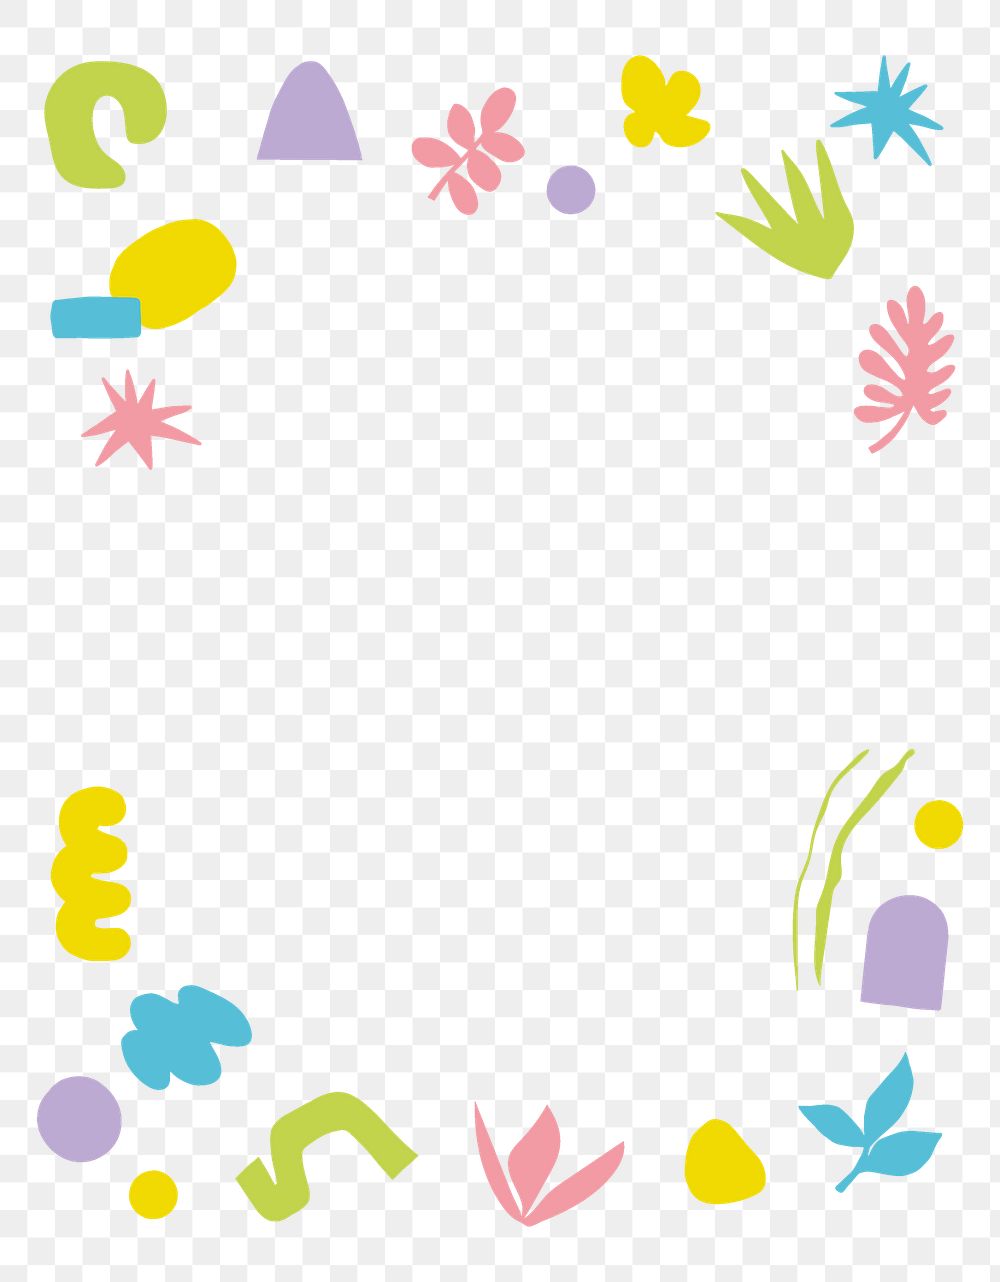 Cute memphis png frame, transparent background, colorful design